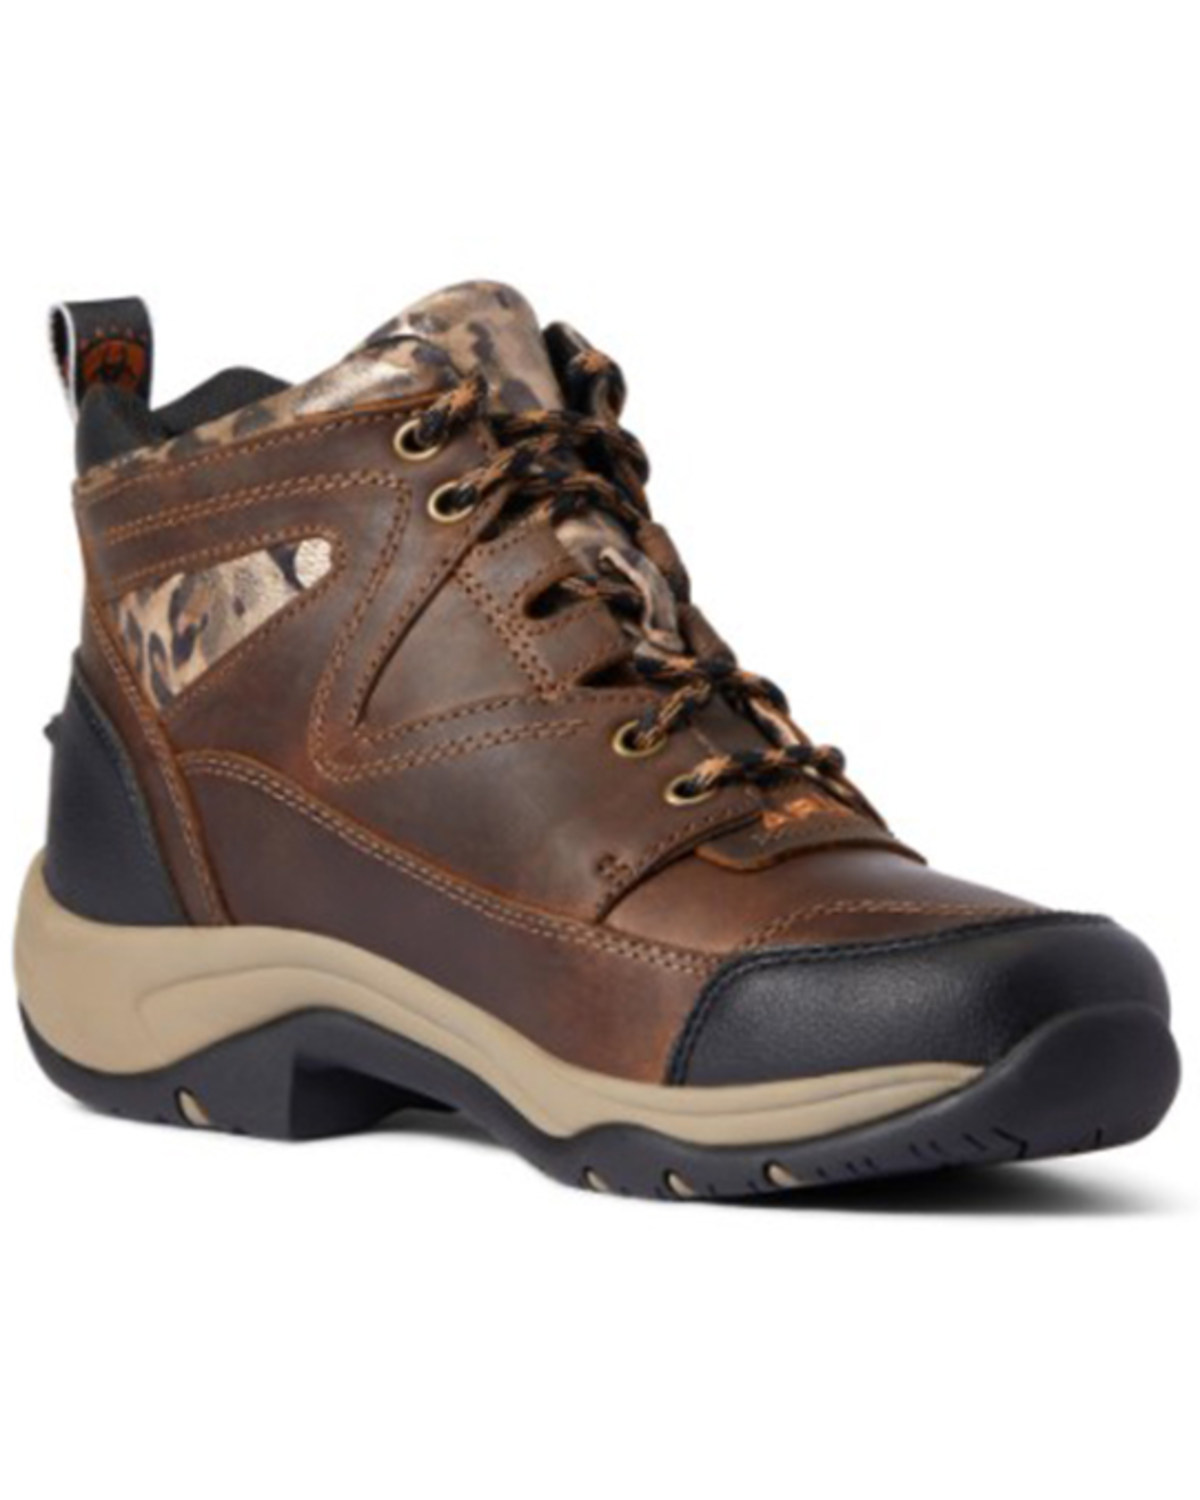 Ariat Women's Cheetah Terrain Hiking Boots - Soft Toe